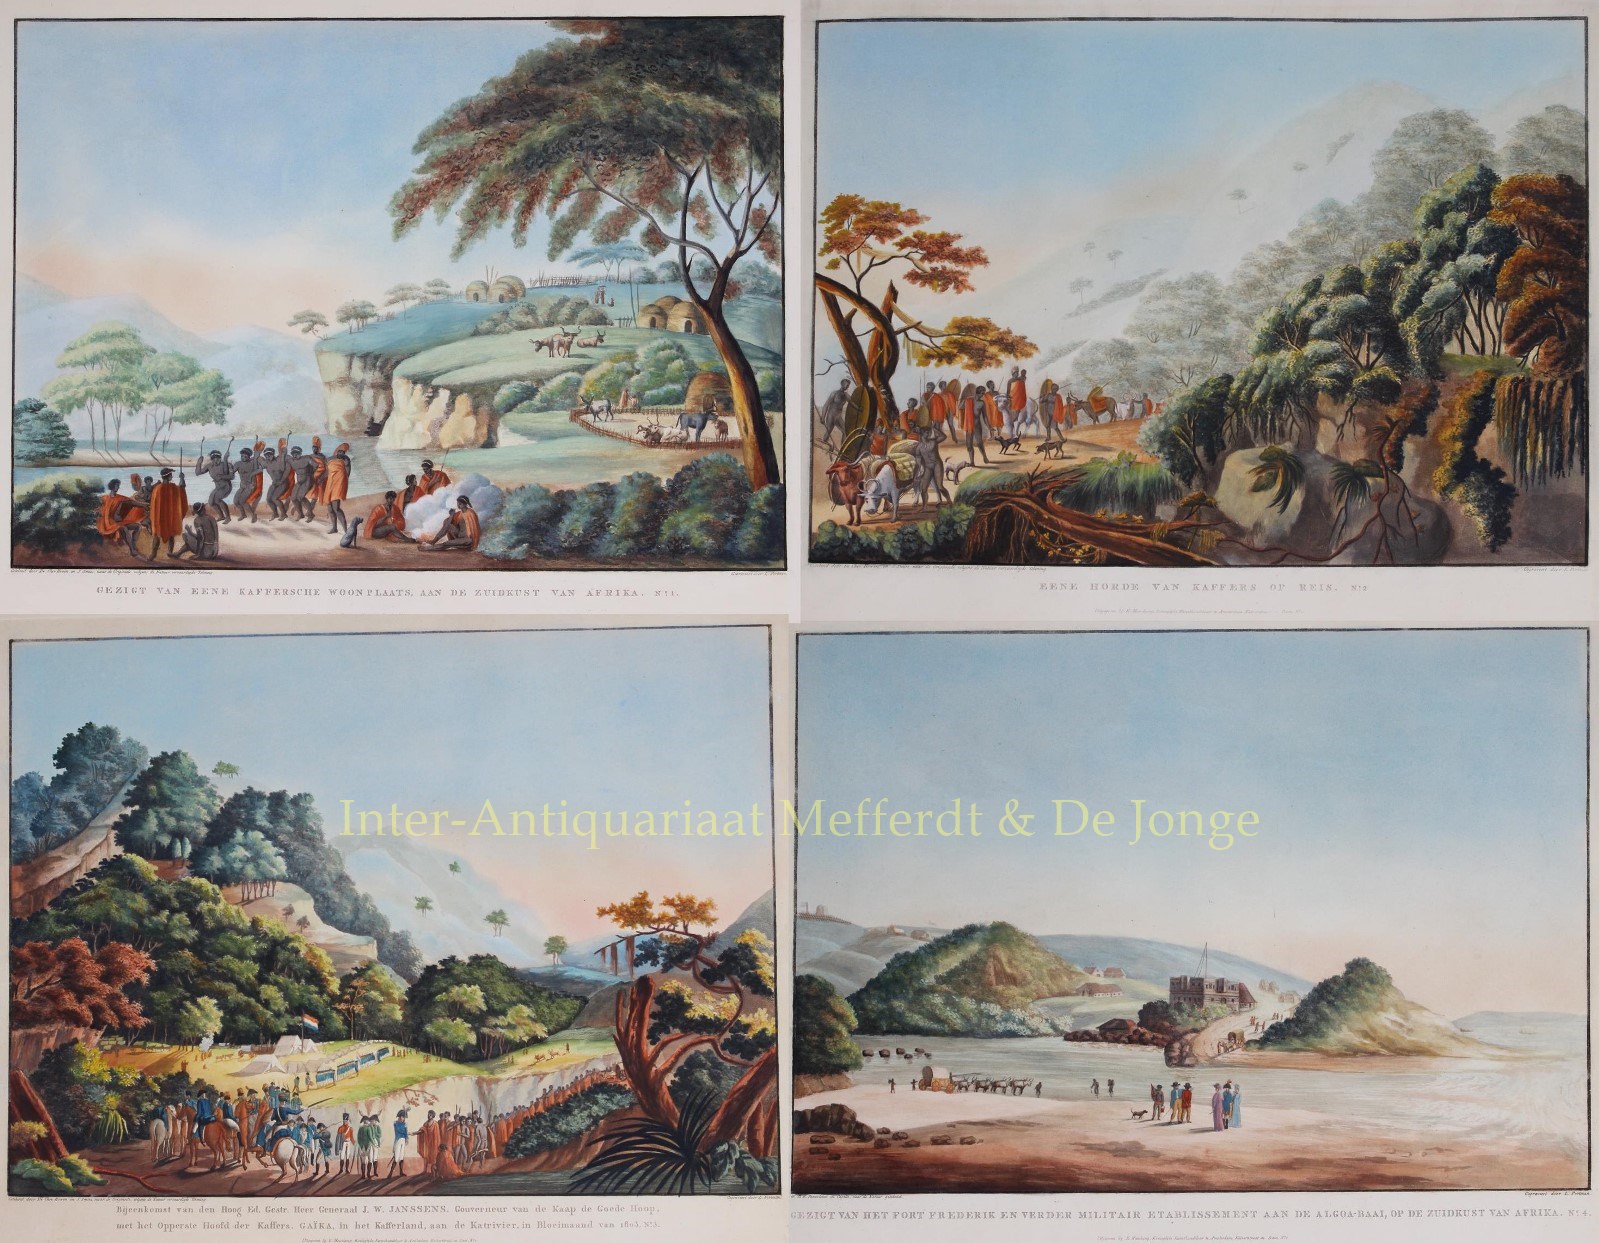  - South Africa, Cape Colony - Evert Maaskamp, 1810